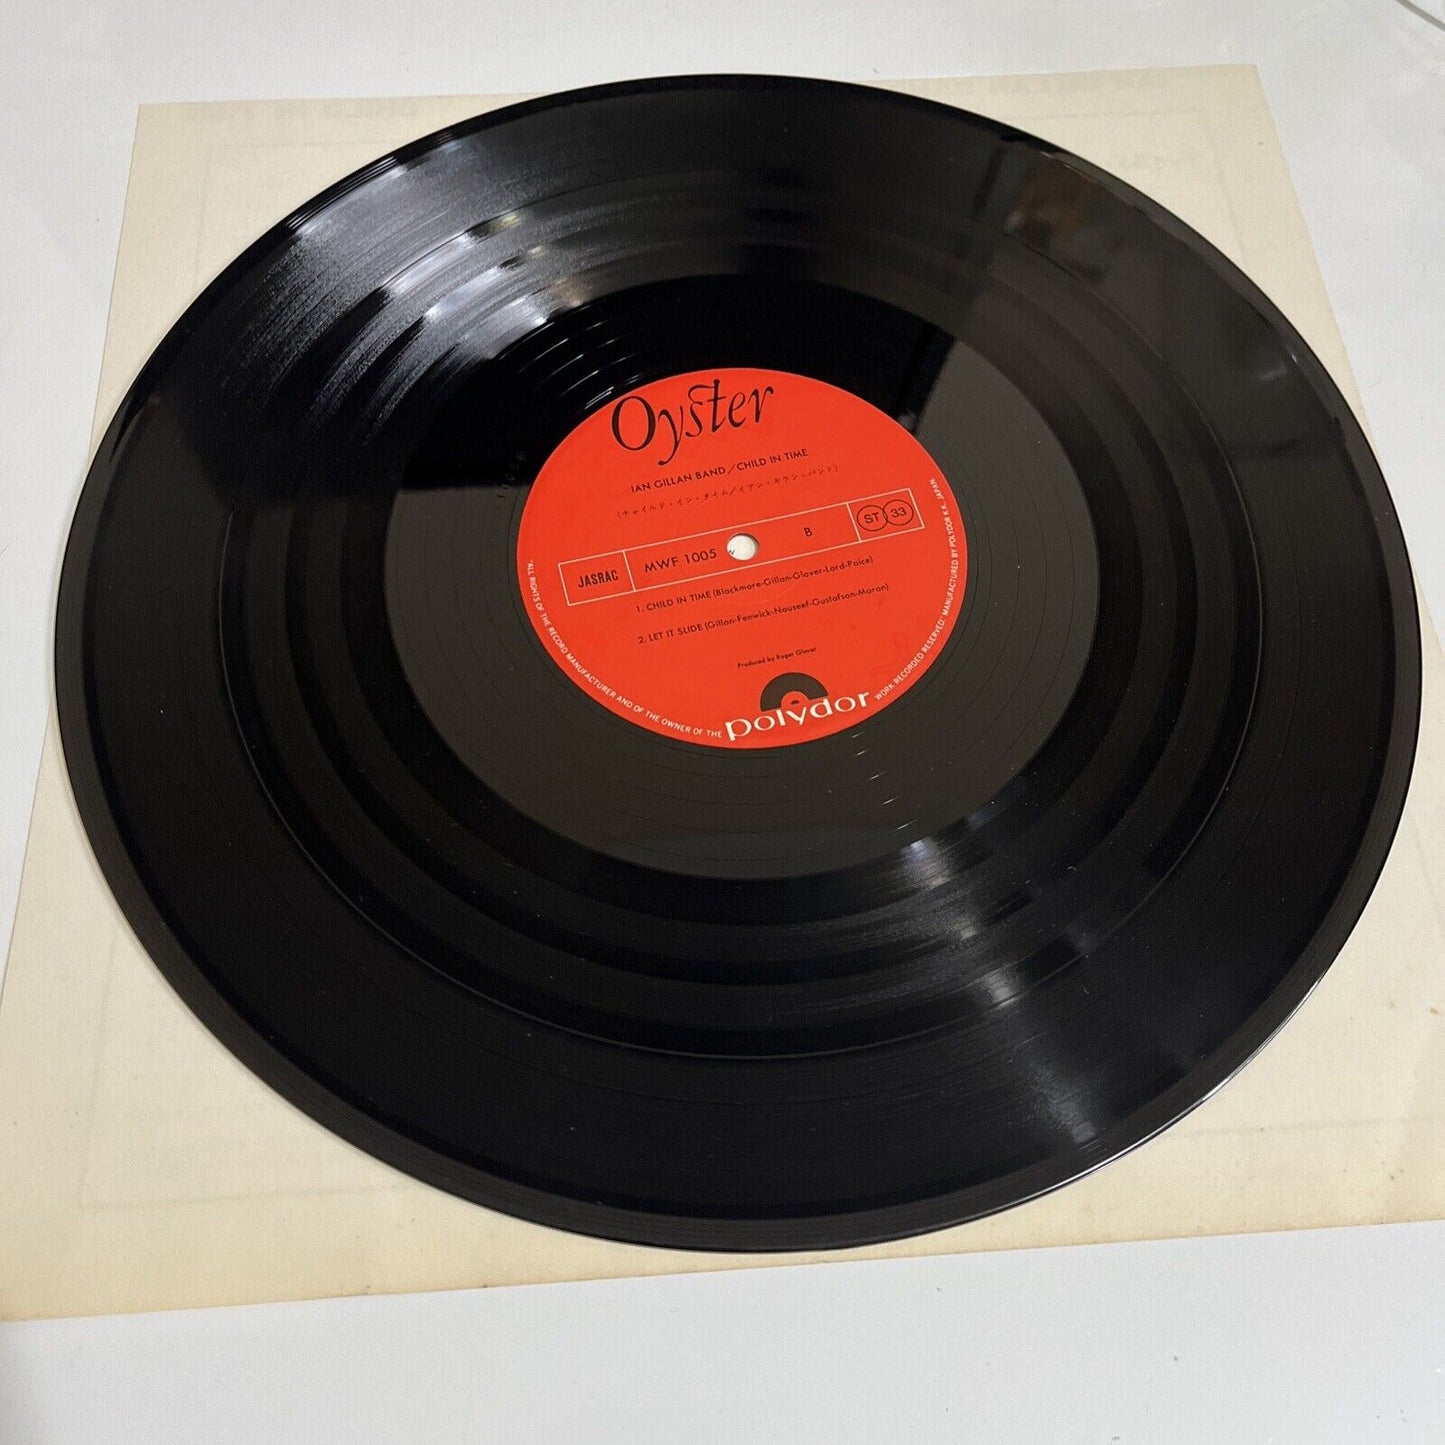 Ian Gillan Band – Child In Time 1976 LP Vinyl Record Gatefold Obi MWF 1005